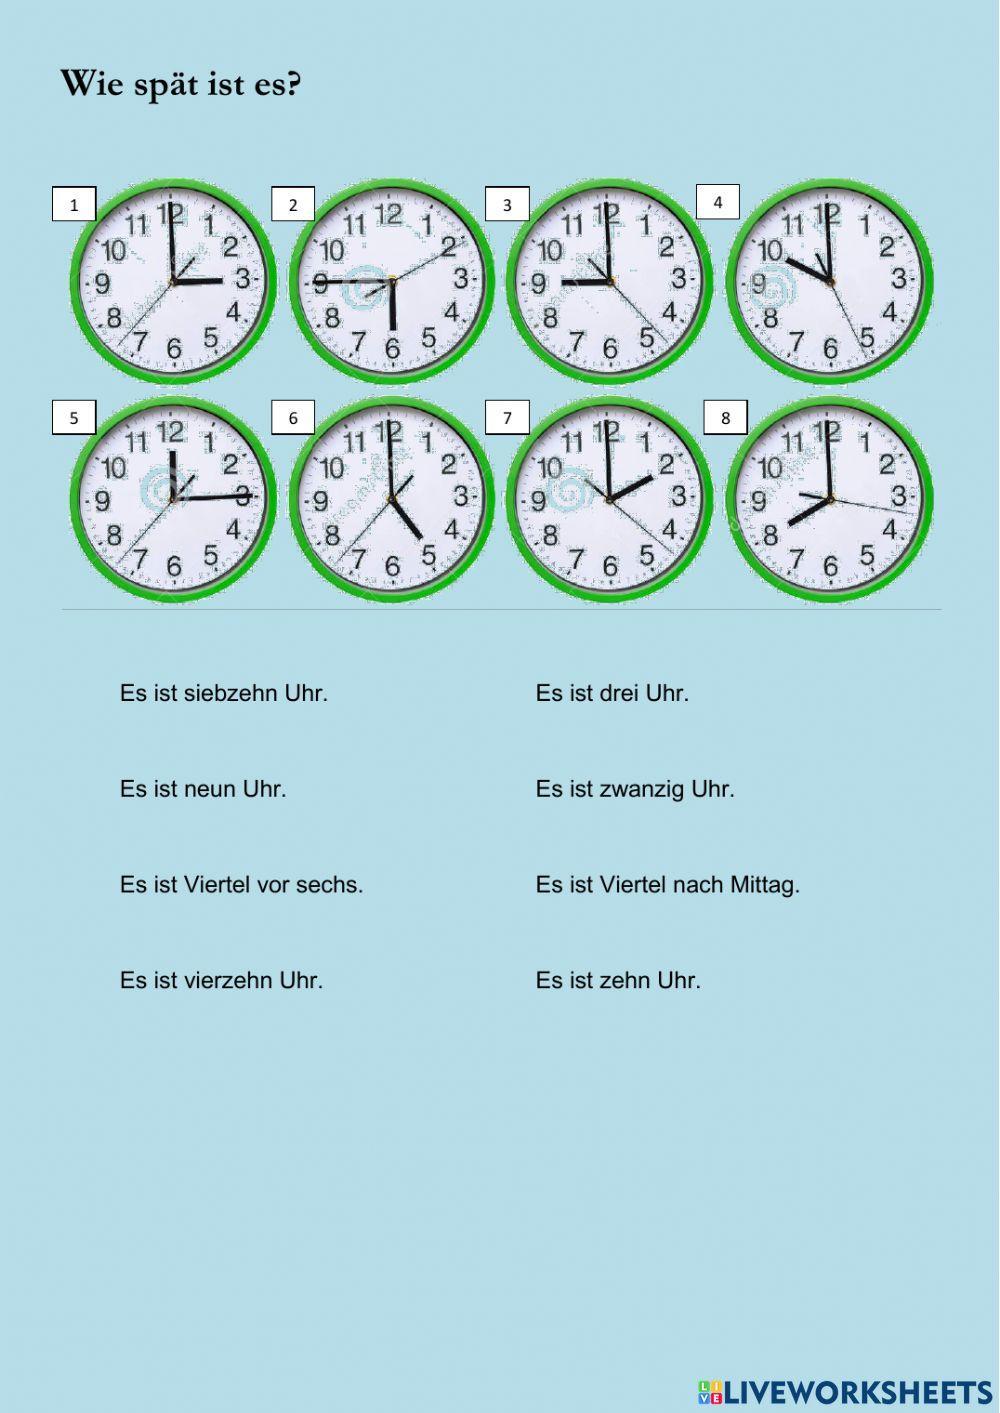 Wie spät ist es? online activity for Grundschule | Live Worksheets